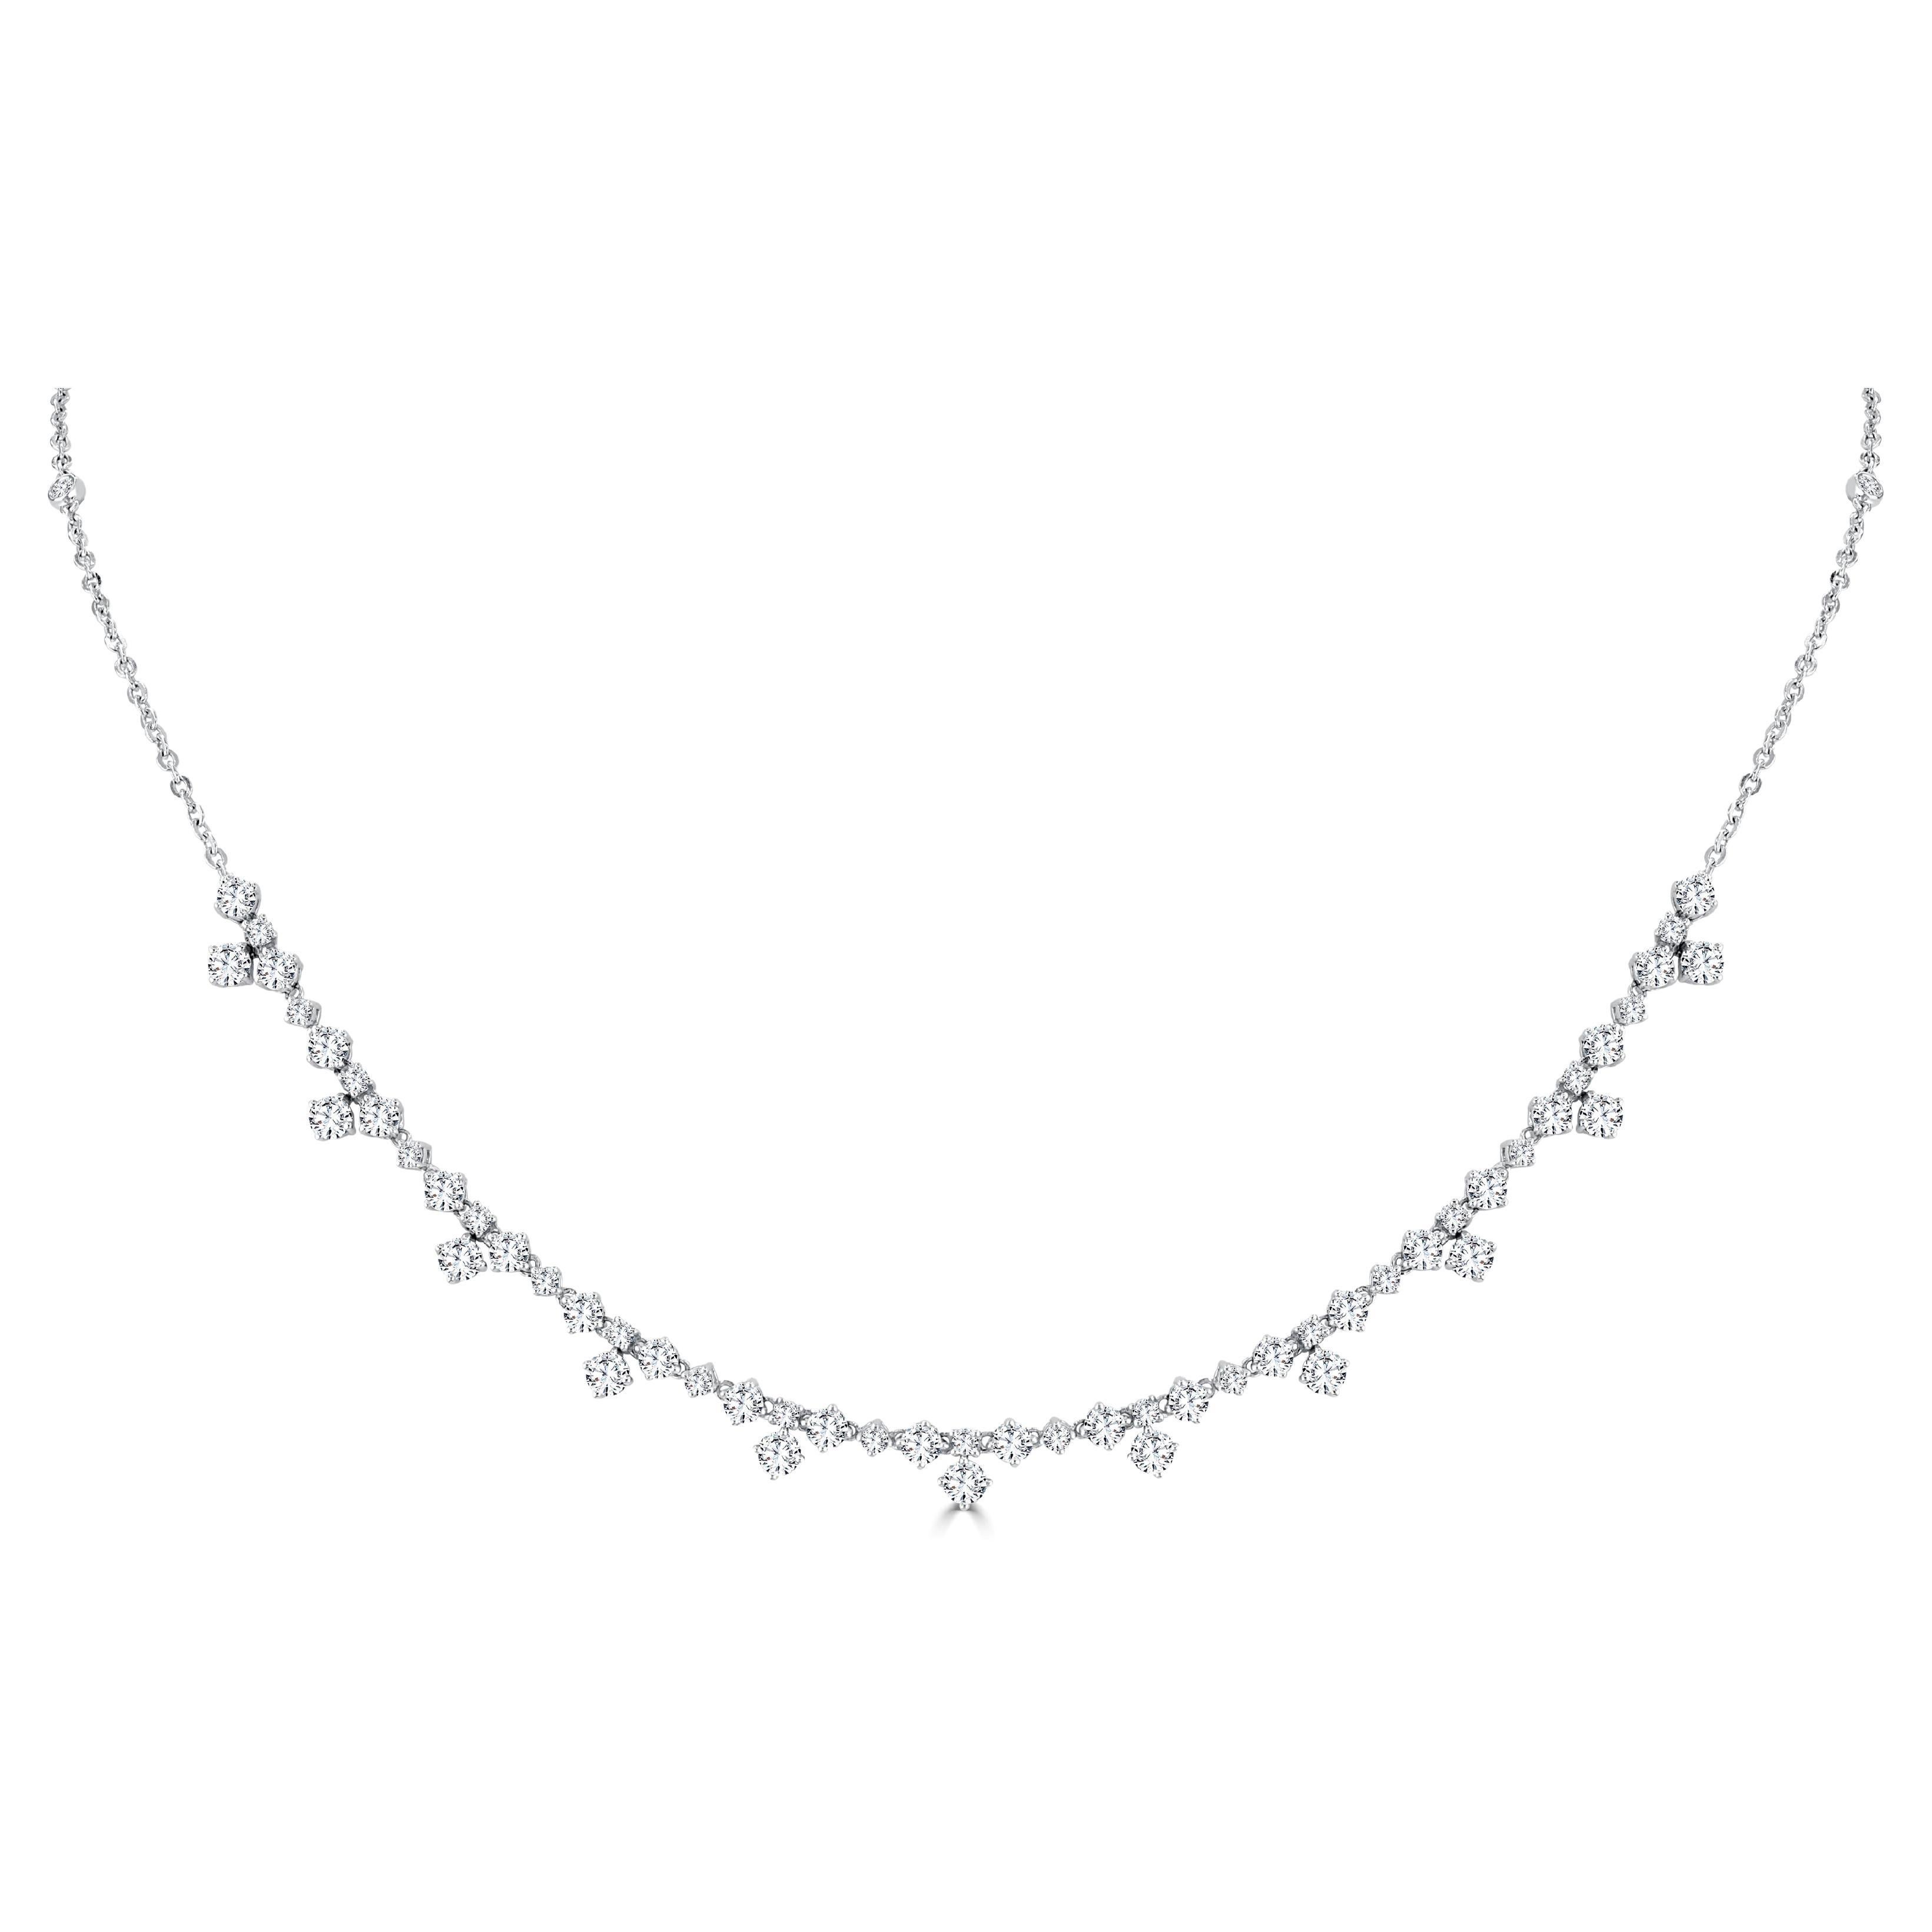 2.42 Carat Diamond Necklace in 14k White Gold